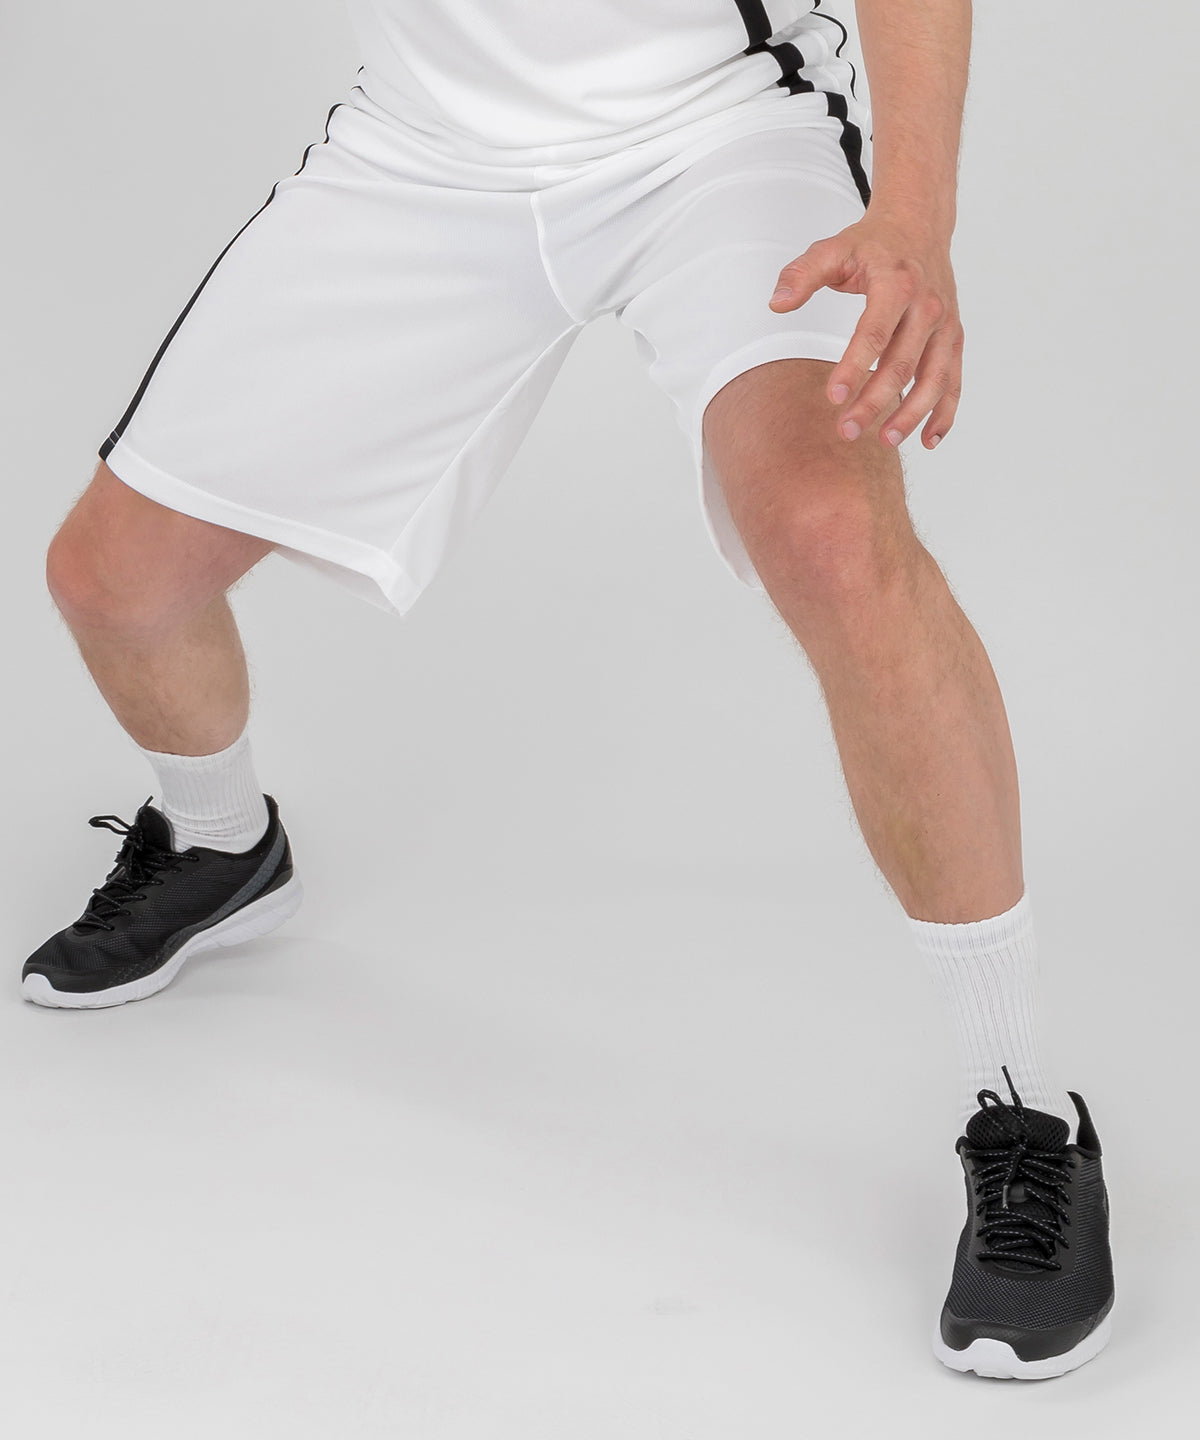 Stuttbuxur - Basketball Quick-dry Shorts